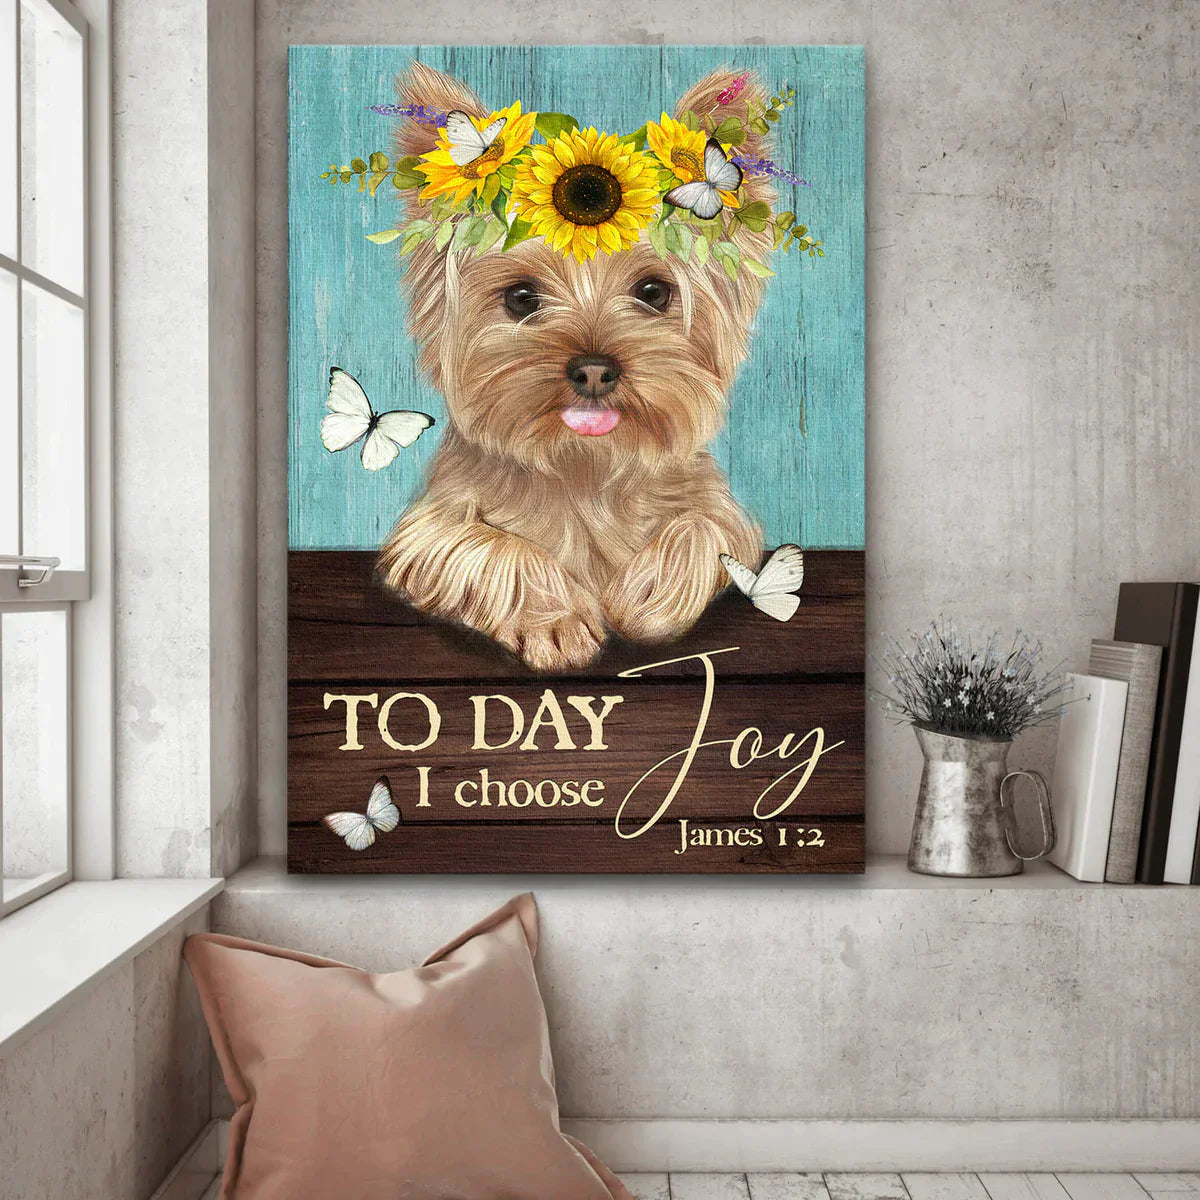 Yorkshire Terrier Dog Portrait Canvas - Yorkshire Terrier, Flower Wreath, Jesus - Today I Choose Joy Canvas - Gift for Yorkshire Terrier, Dog Lovers, Christian - Amzanimalsgift